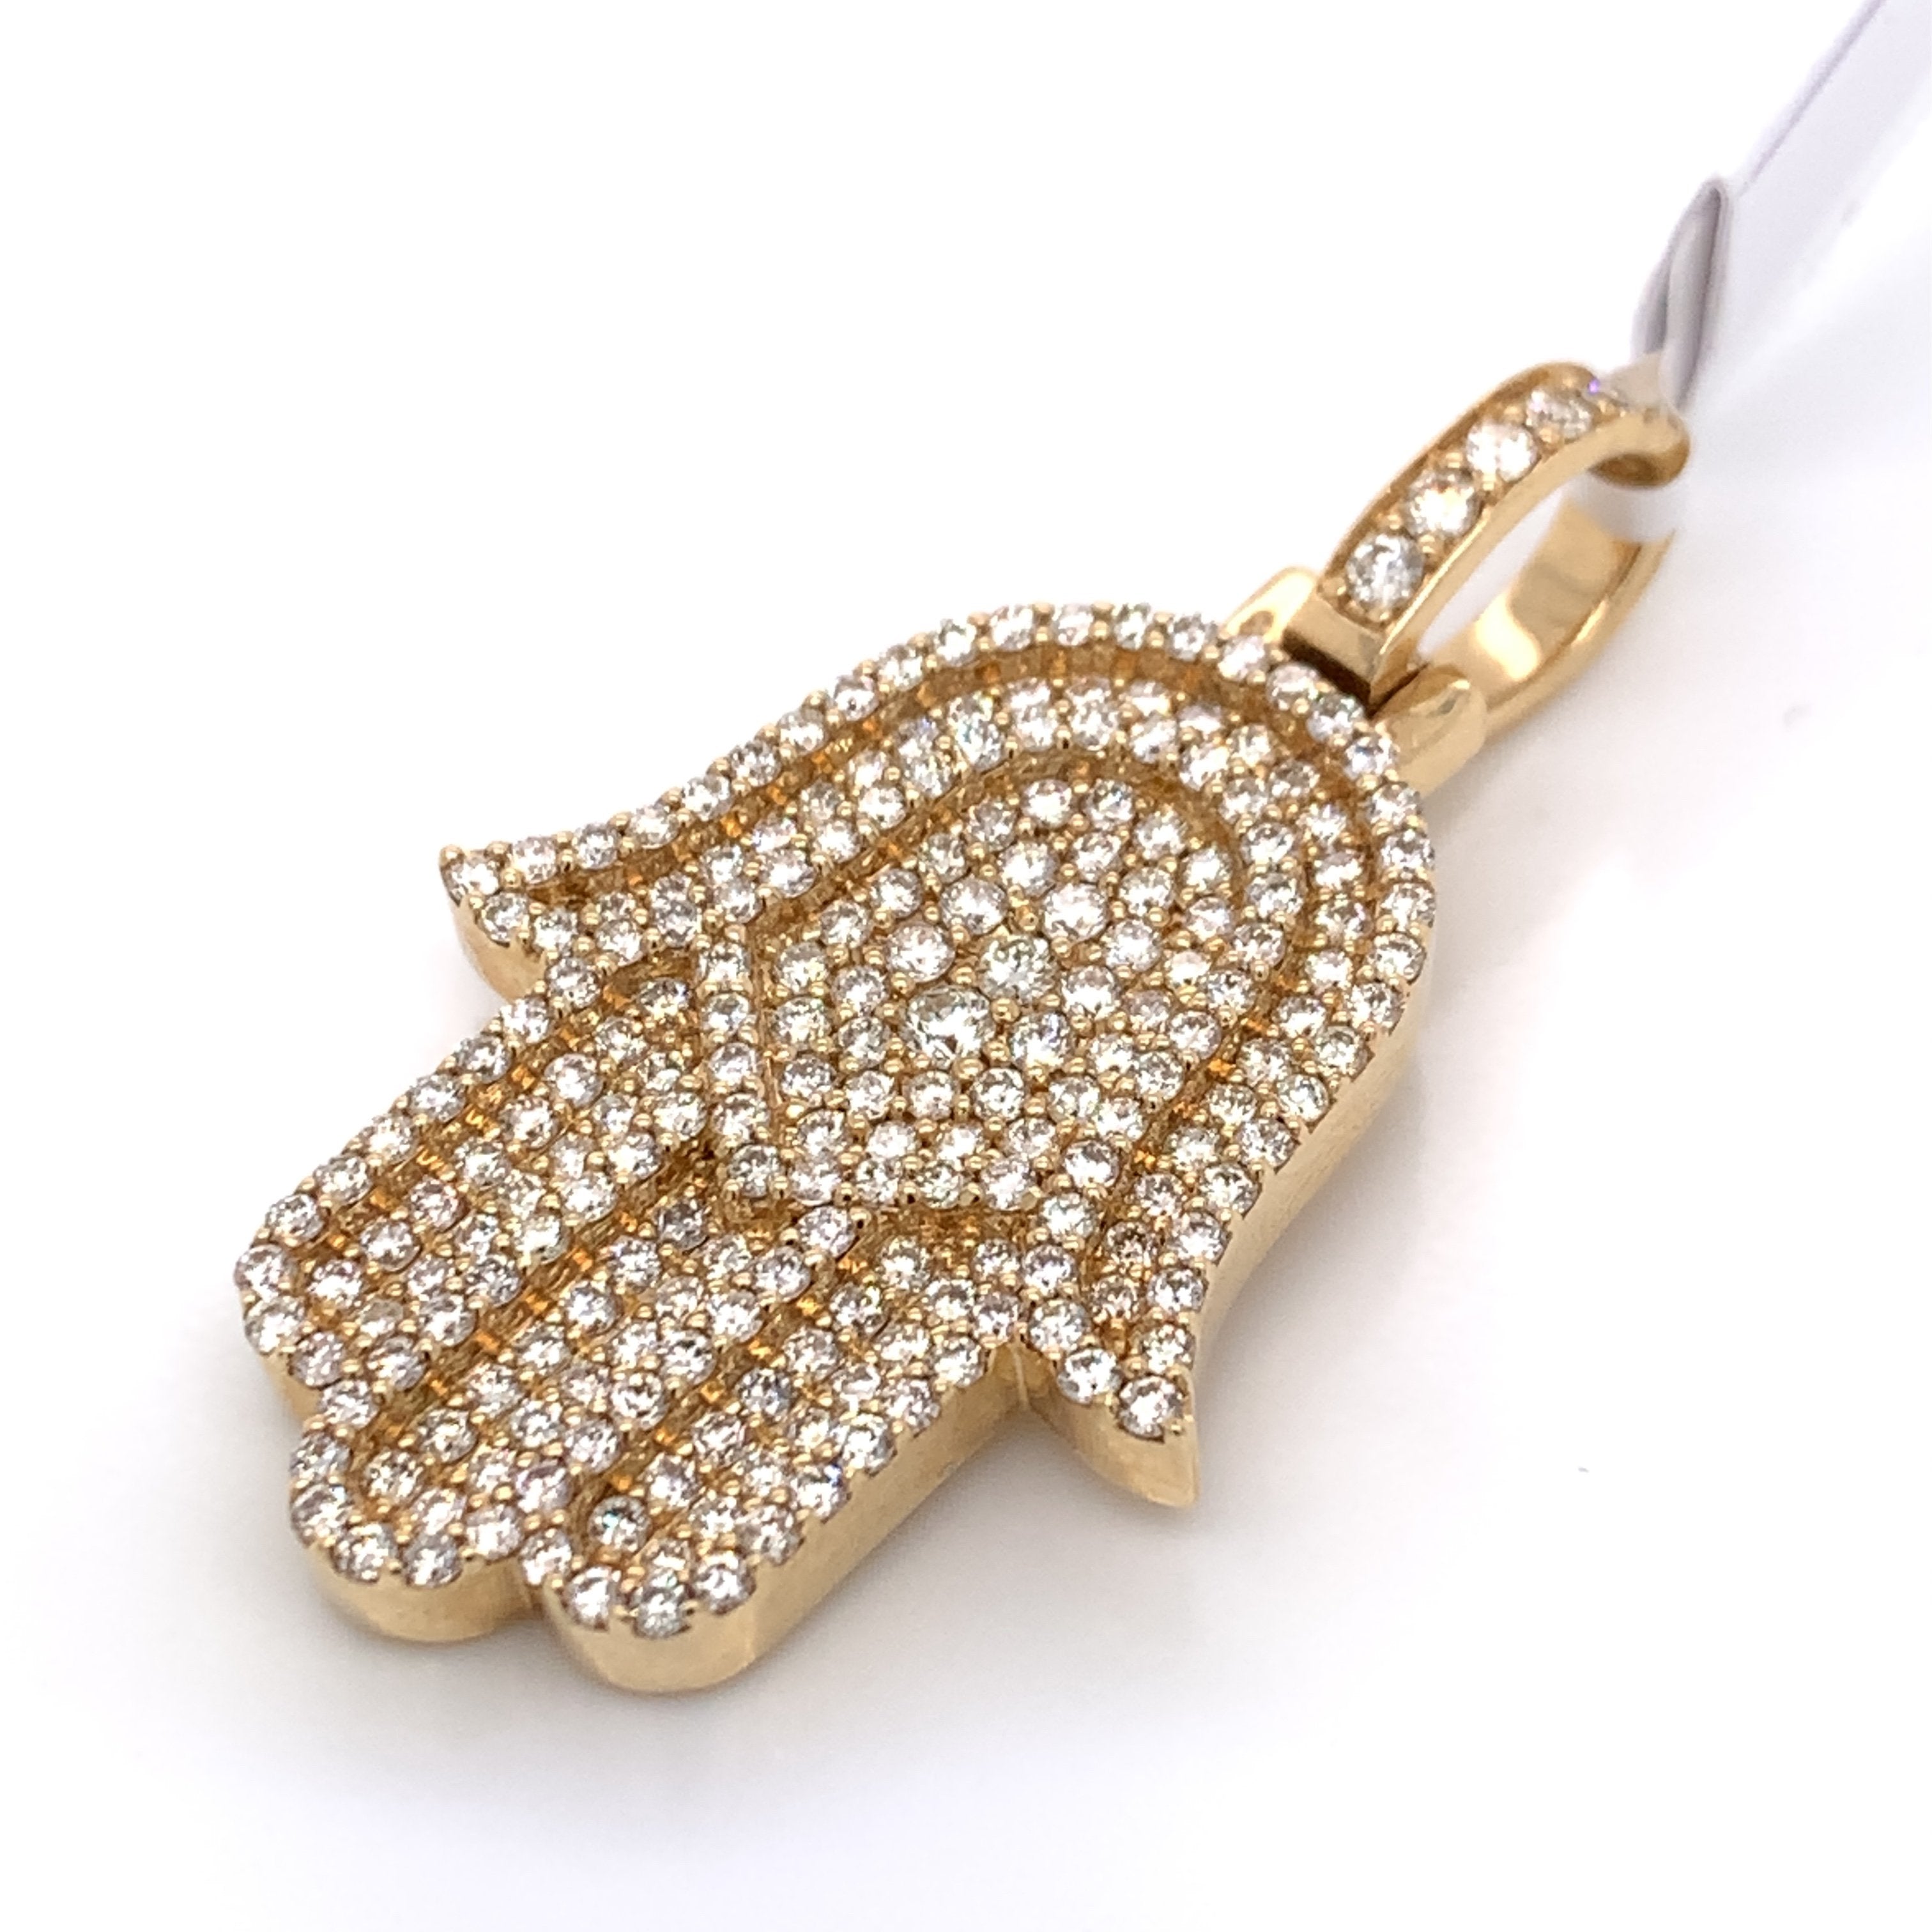 2.75 CT. Diamond Hamsa Hand Pendant in 10K Gold - White Carat Diamonds 